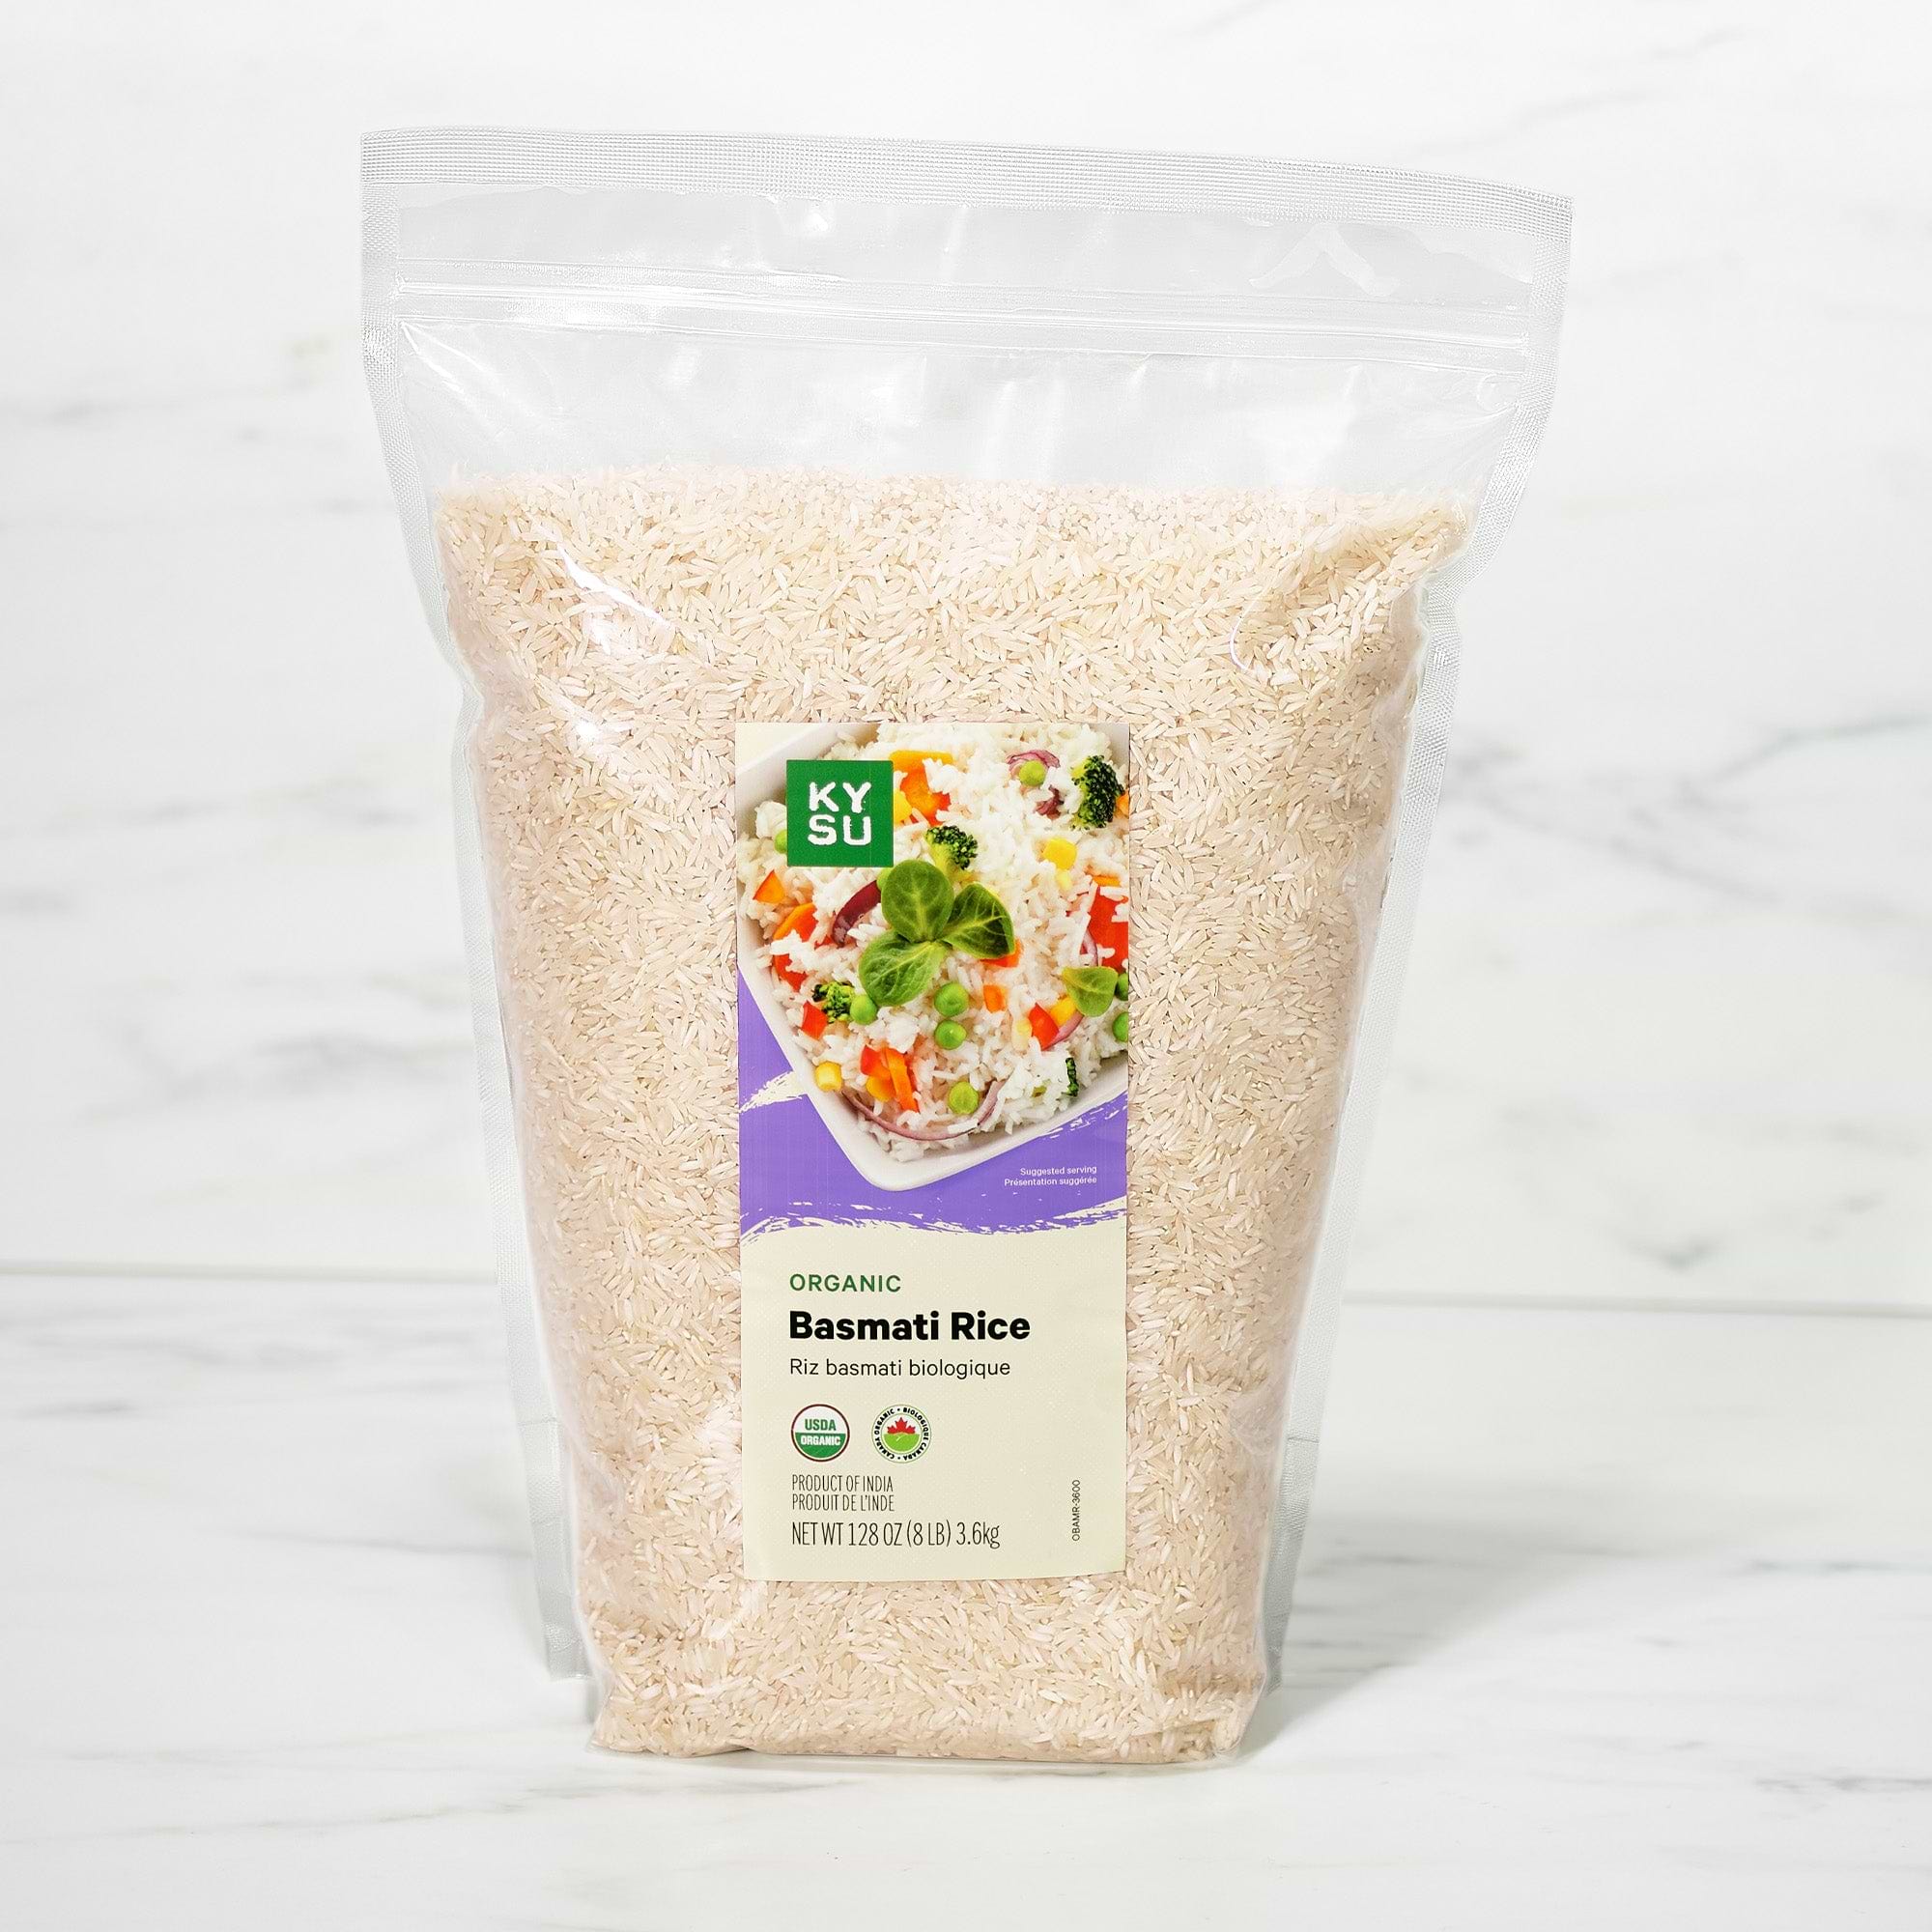 Organic Basmati Rice, 3.6kg